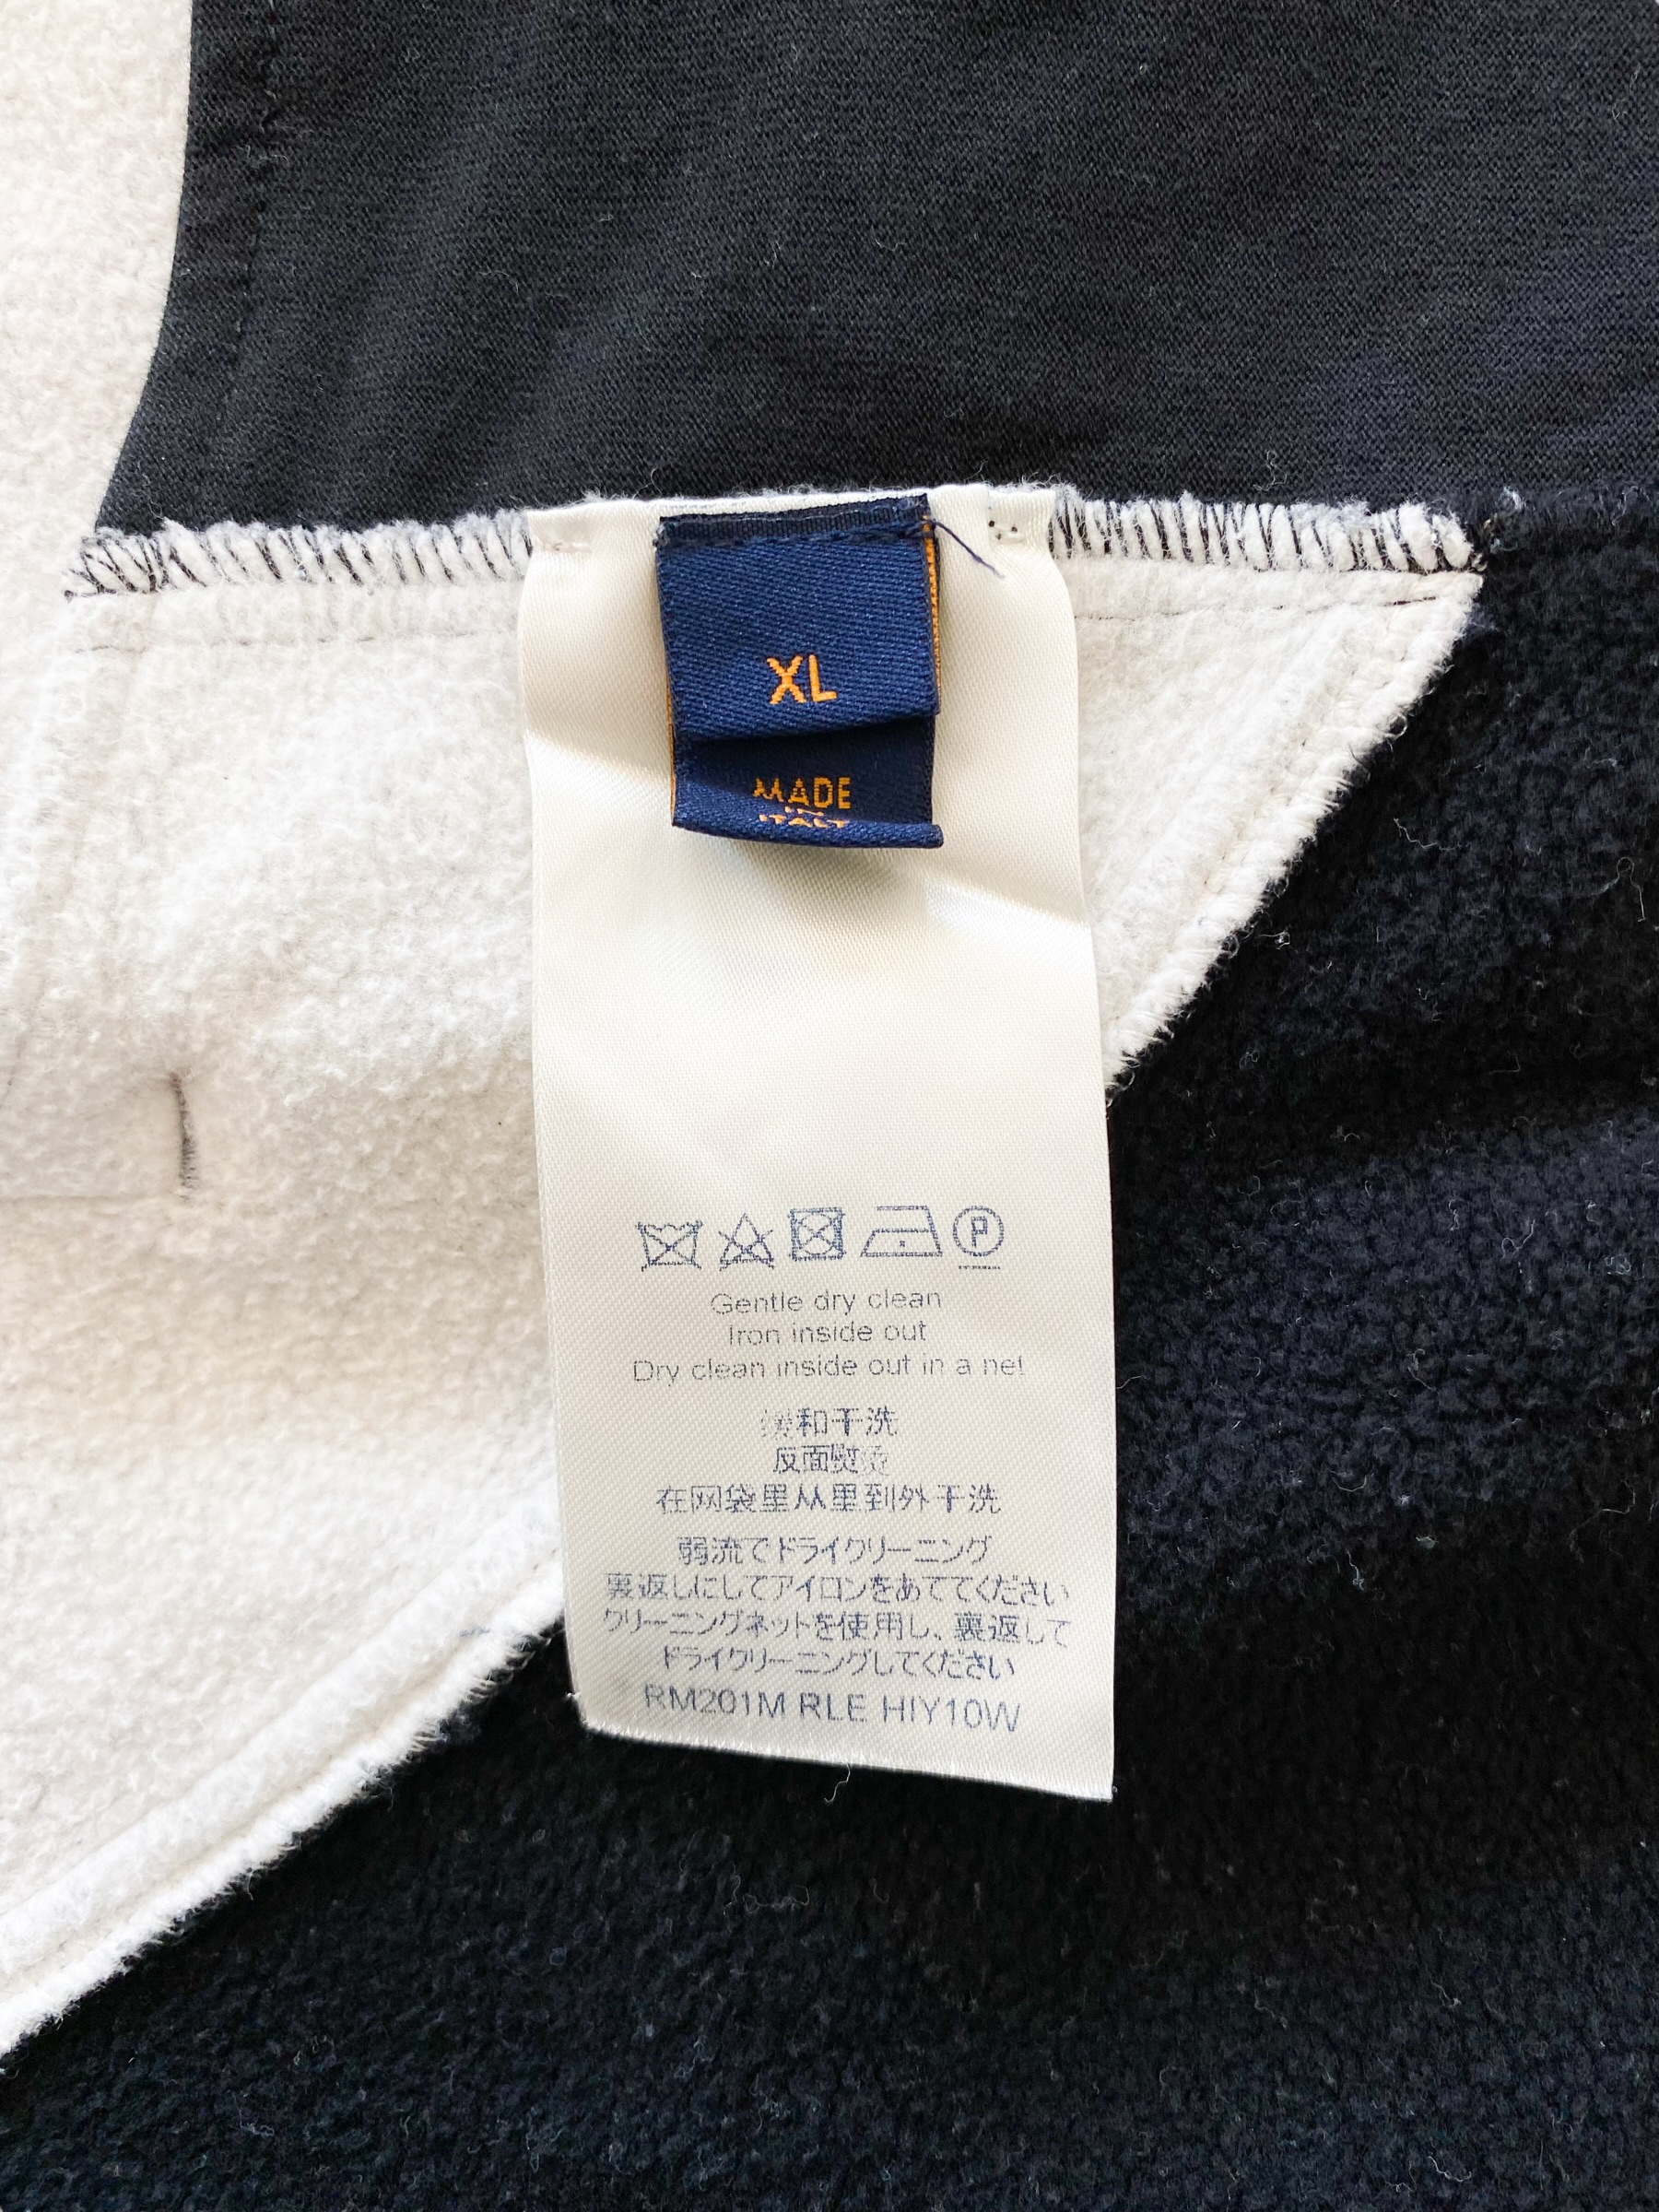 Louis Vuitton 2021 Monogram Circle Cut Hoodie - Black Sweatshirts & Hoodies,  Clothing - LOU638660